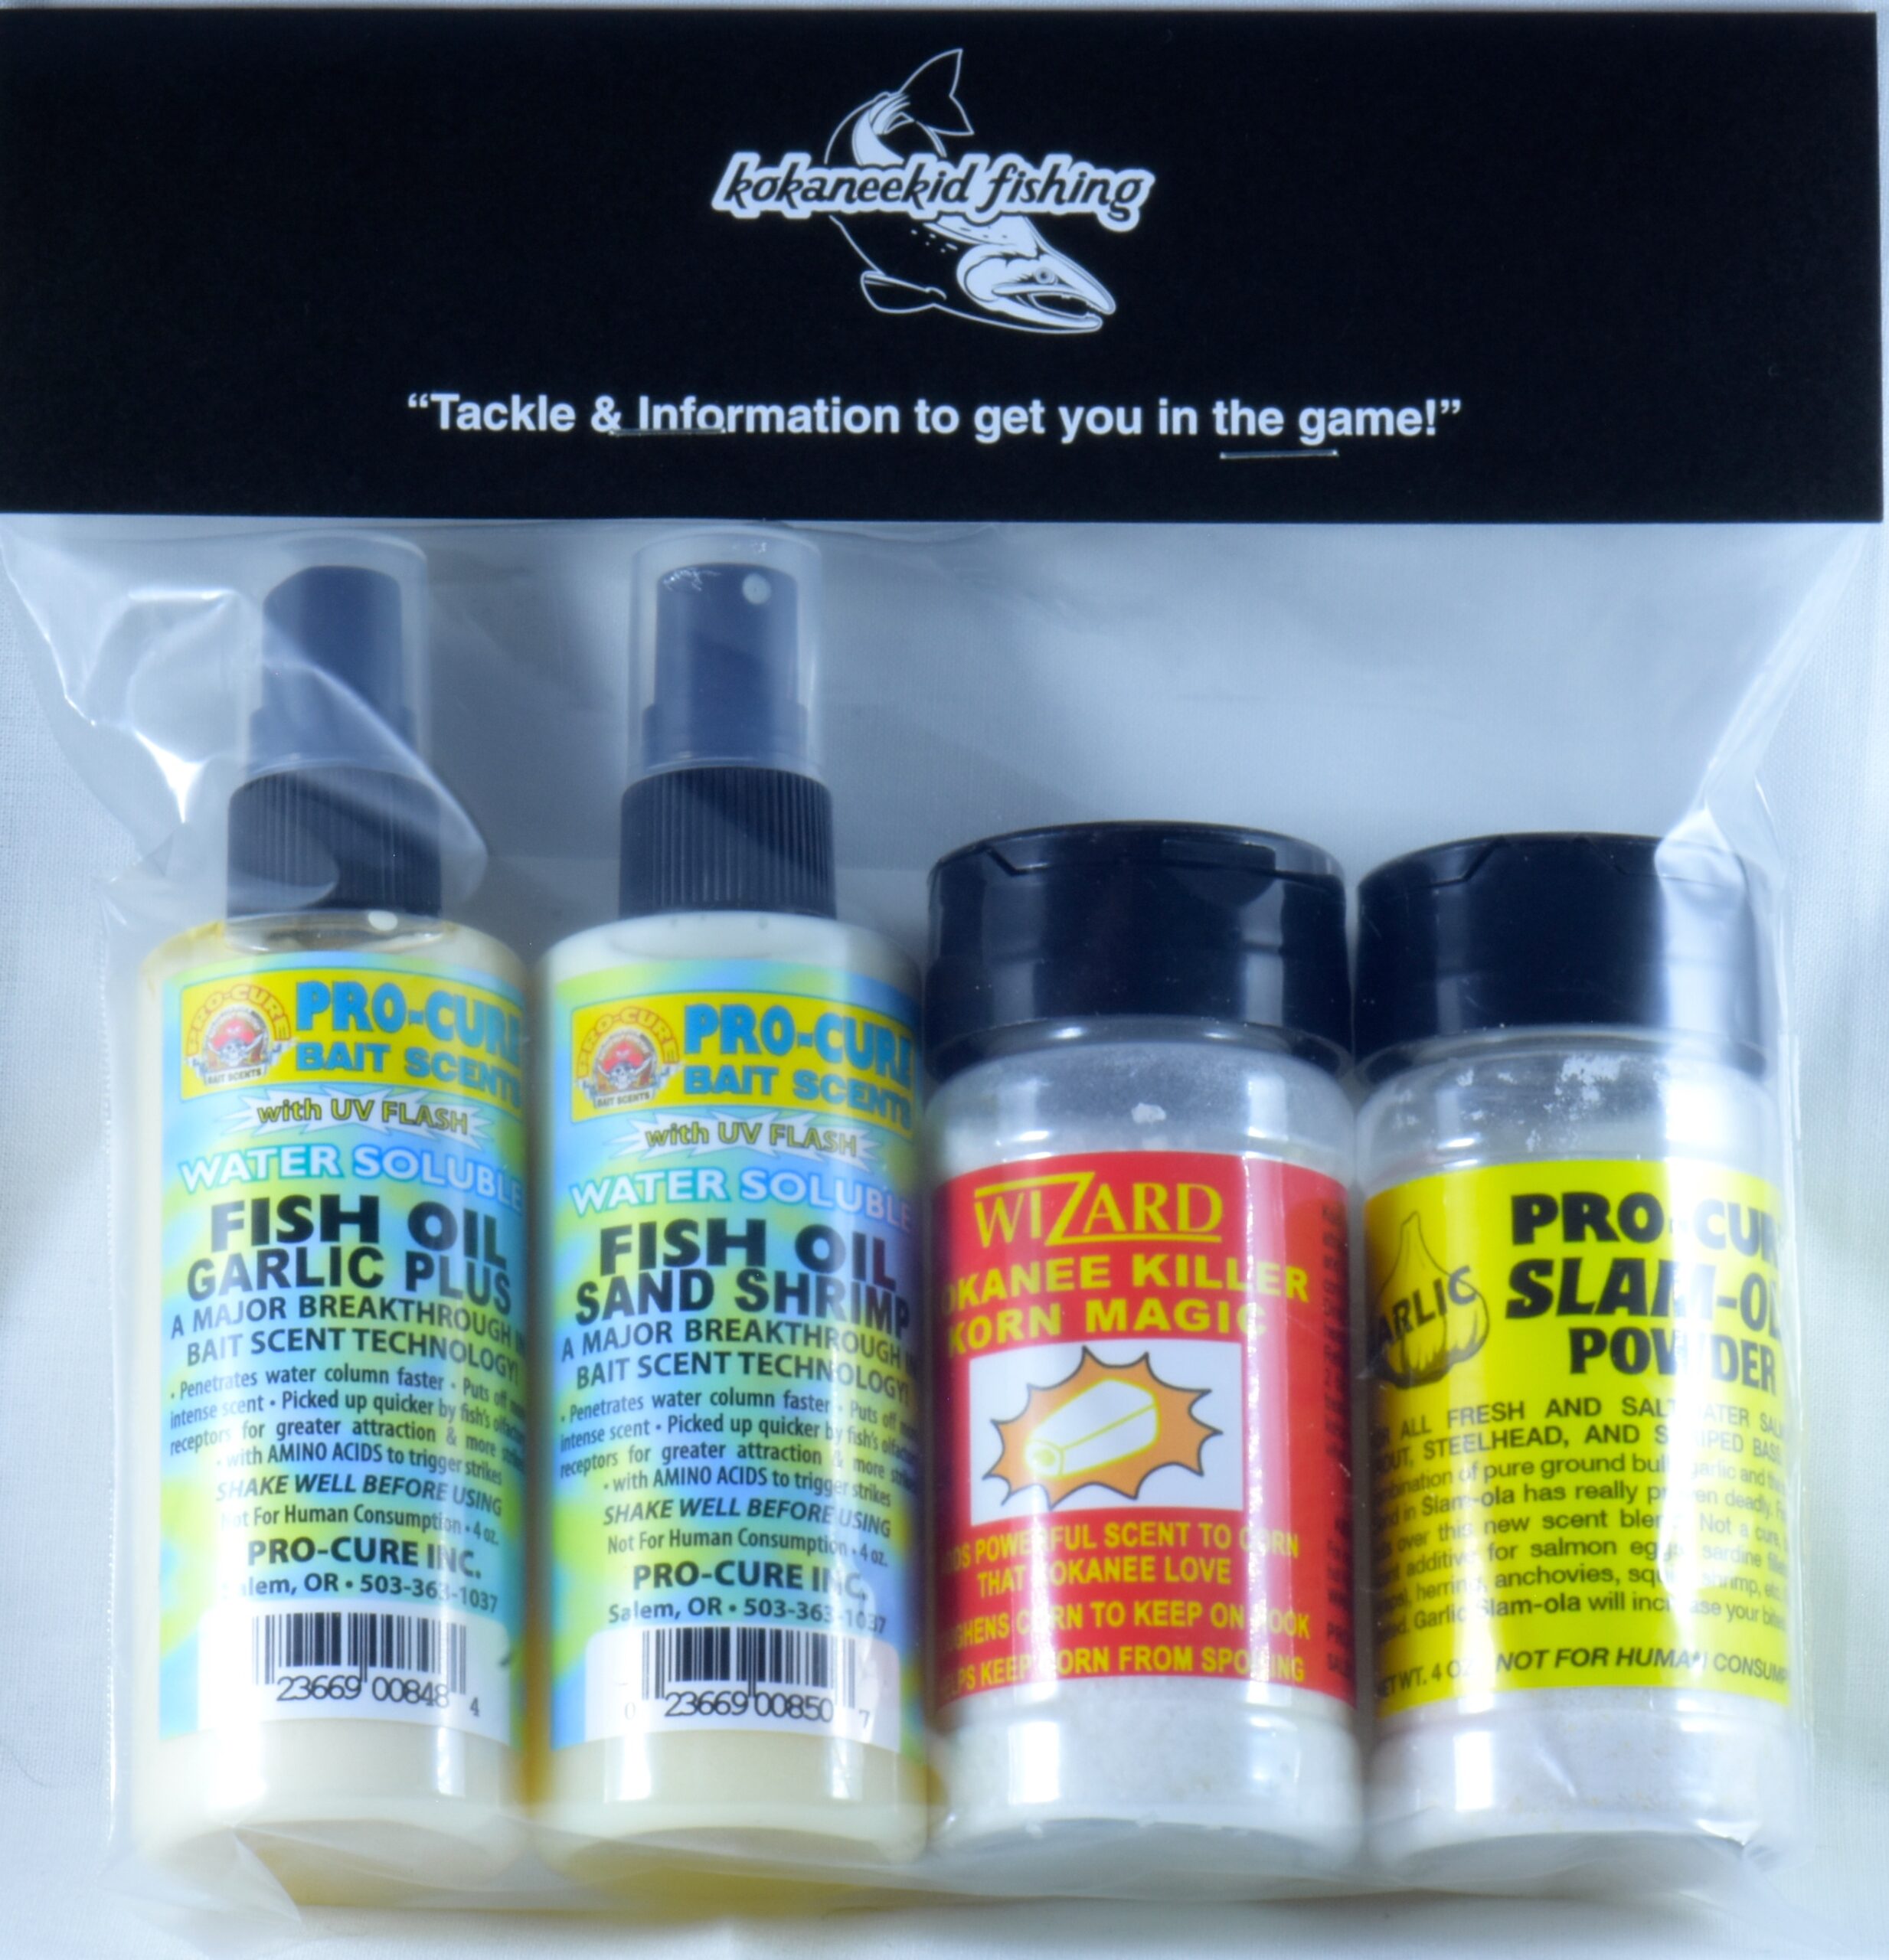 Pro-Cure Garlic Shrimp Scent Pack - Kokaneekid Fishing